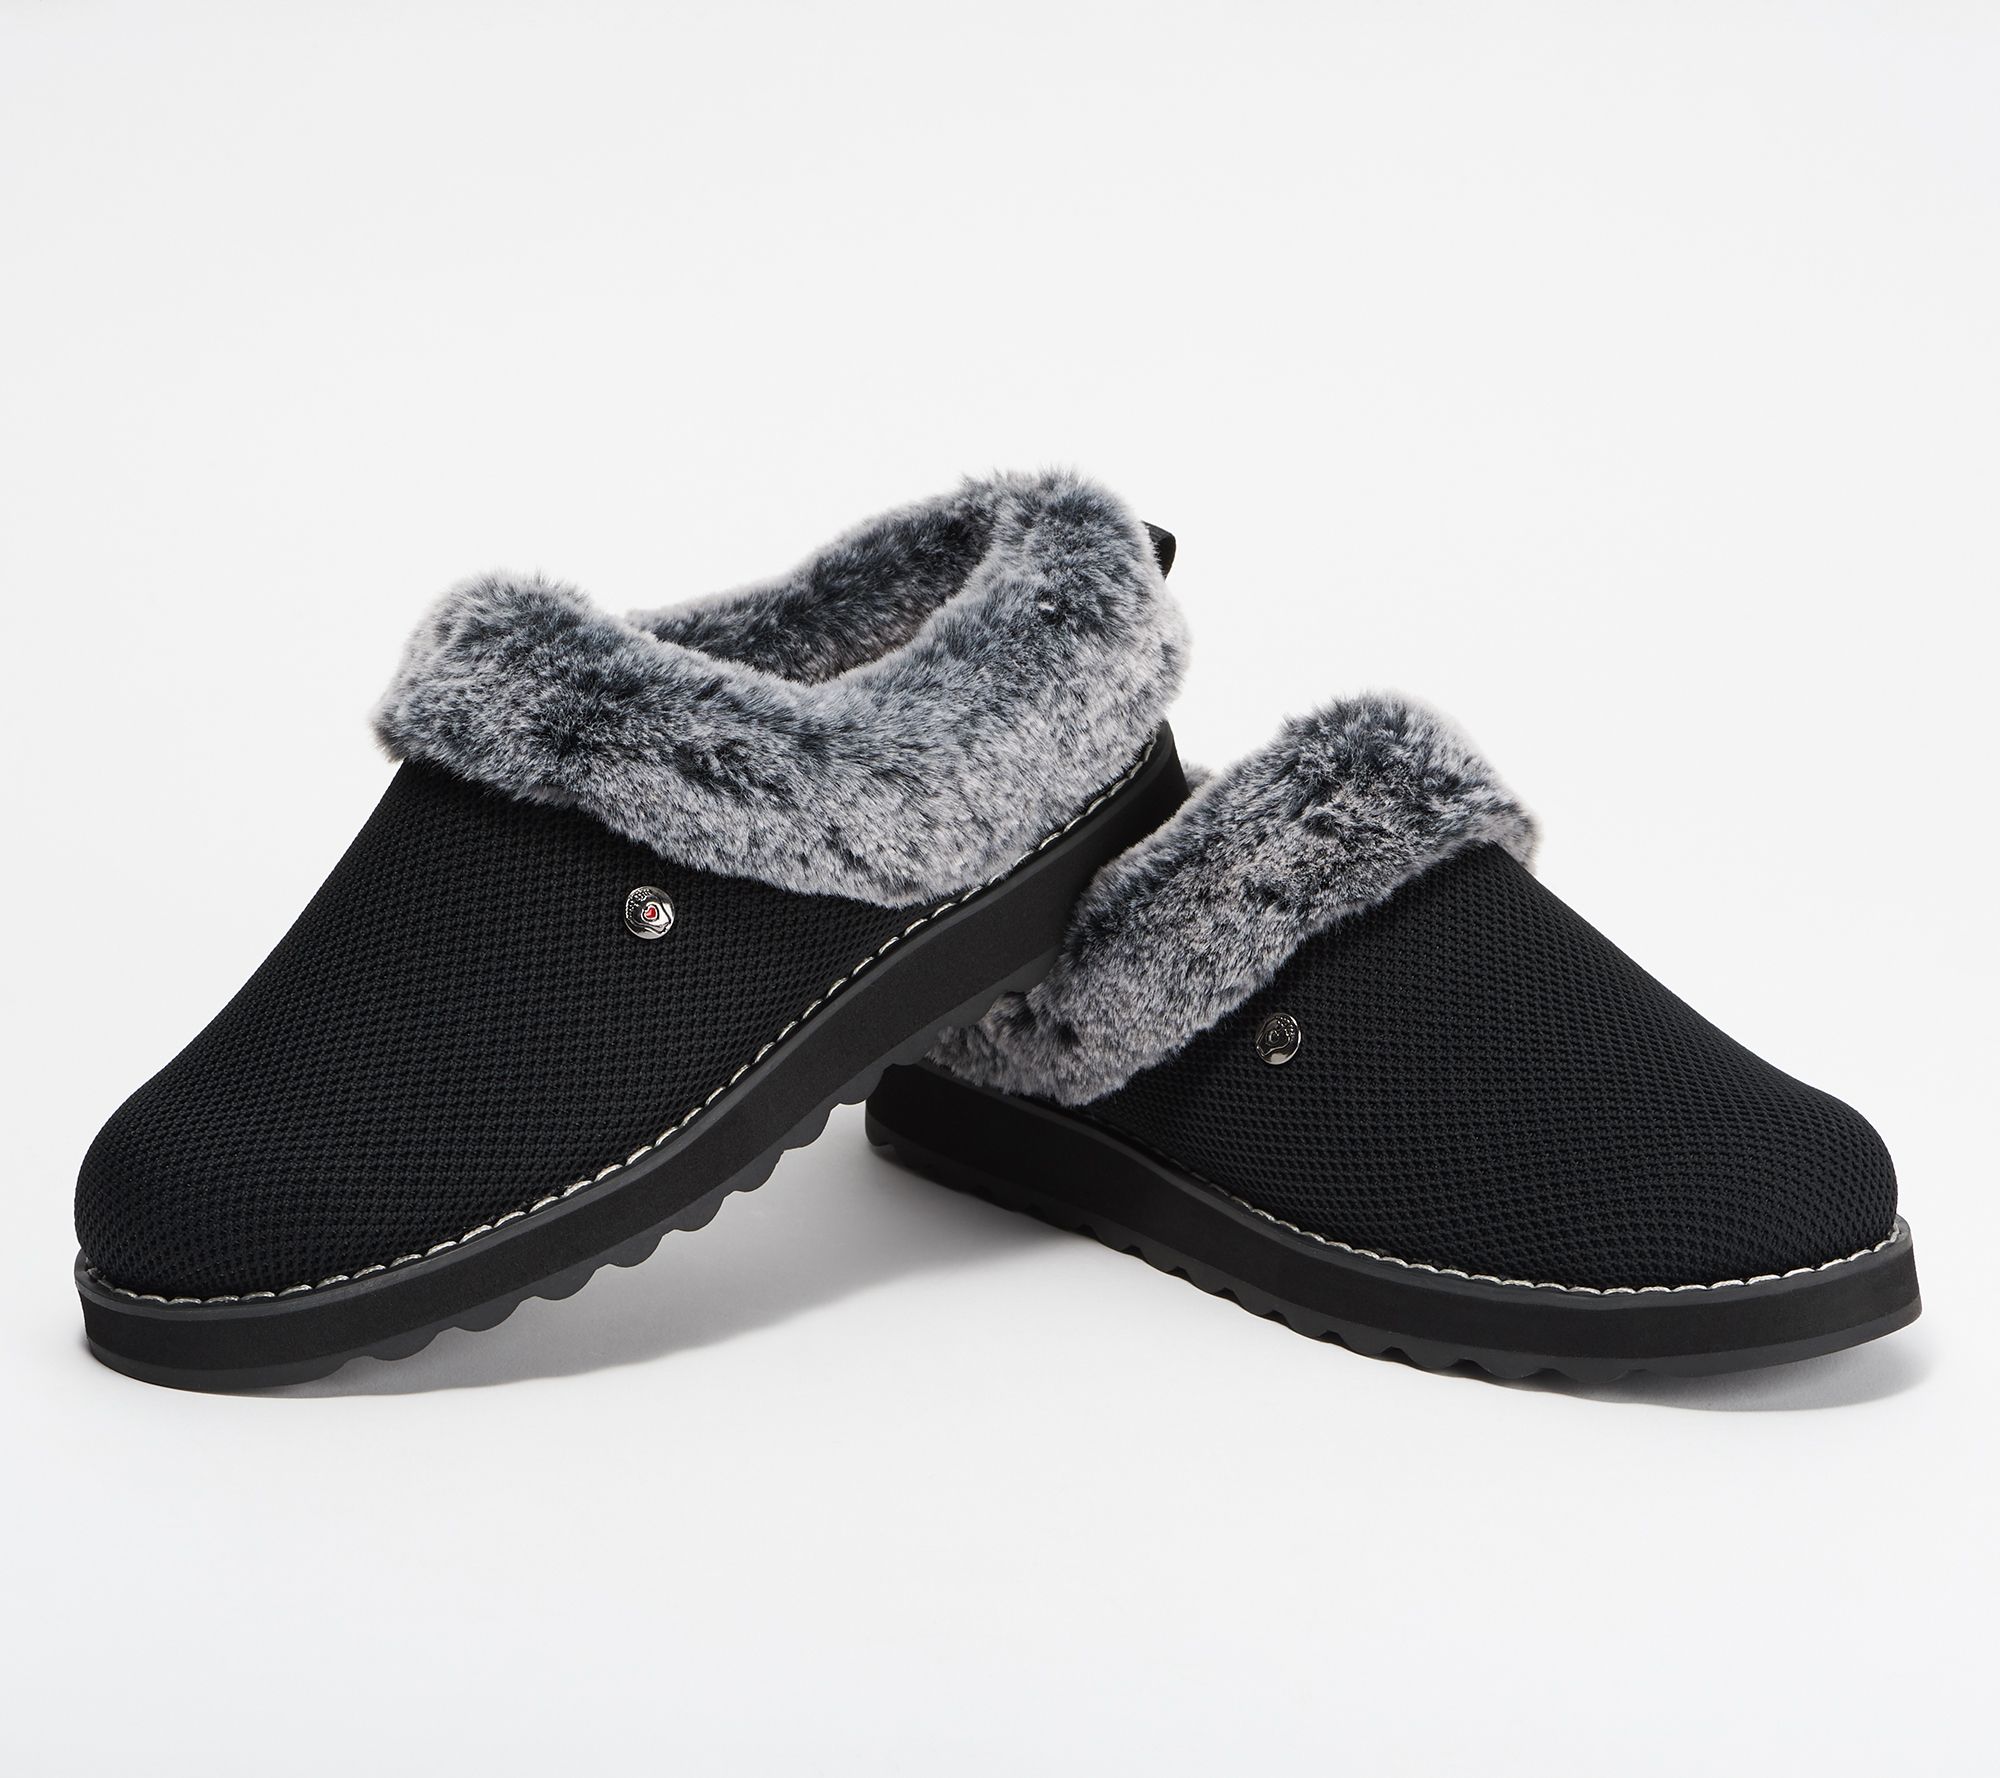 skechers bobs slippers sale